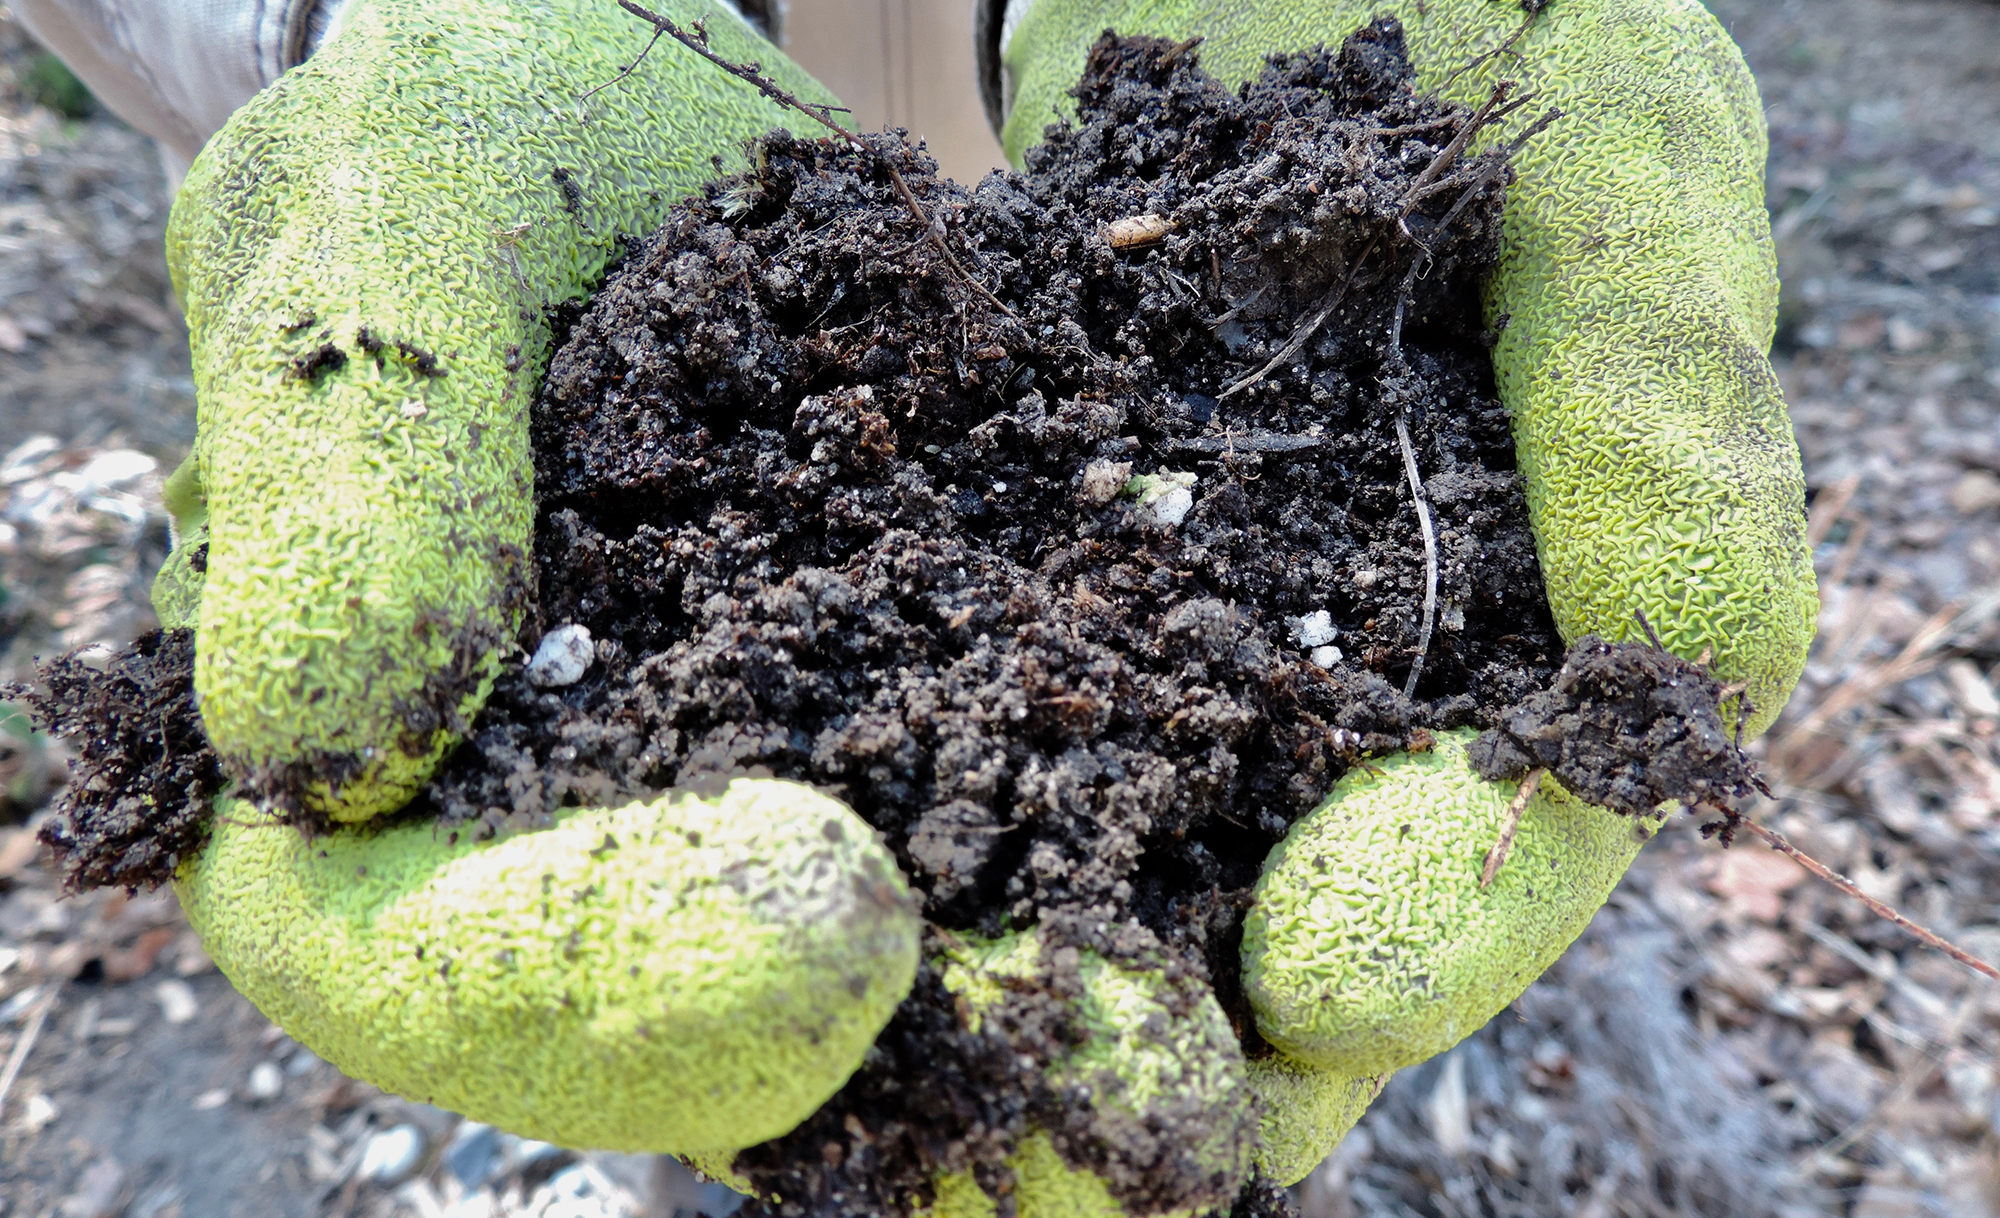 Gloved hands holding compost.